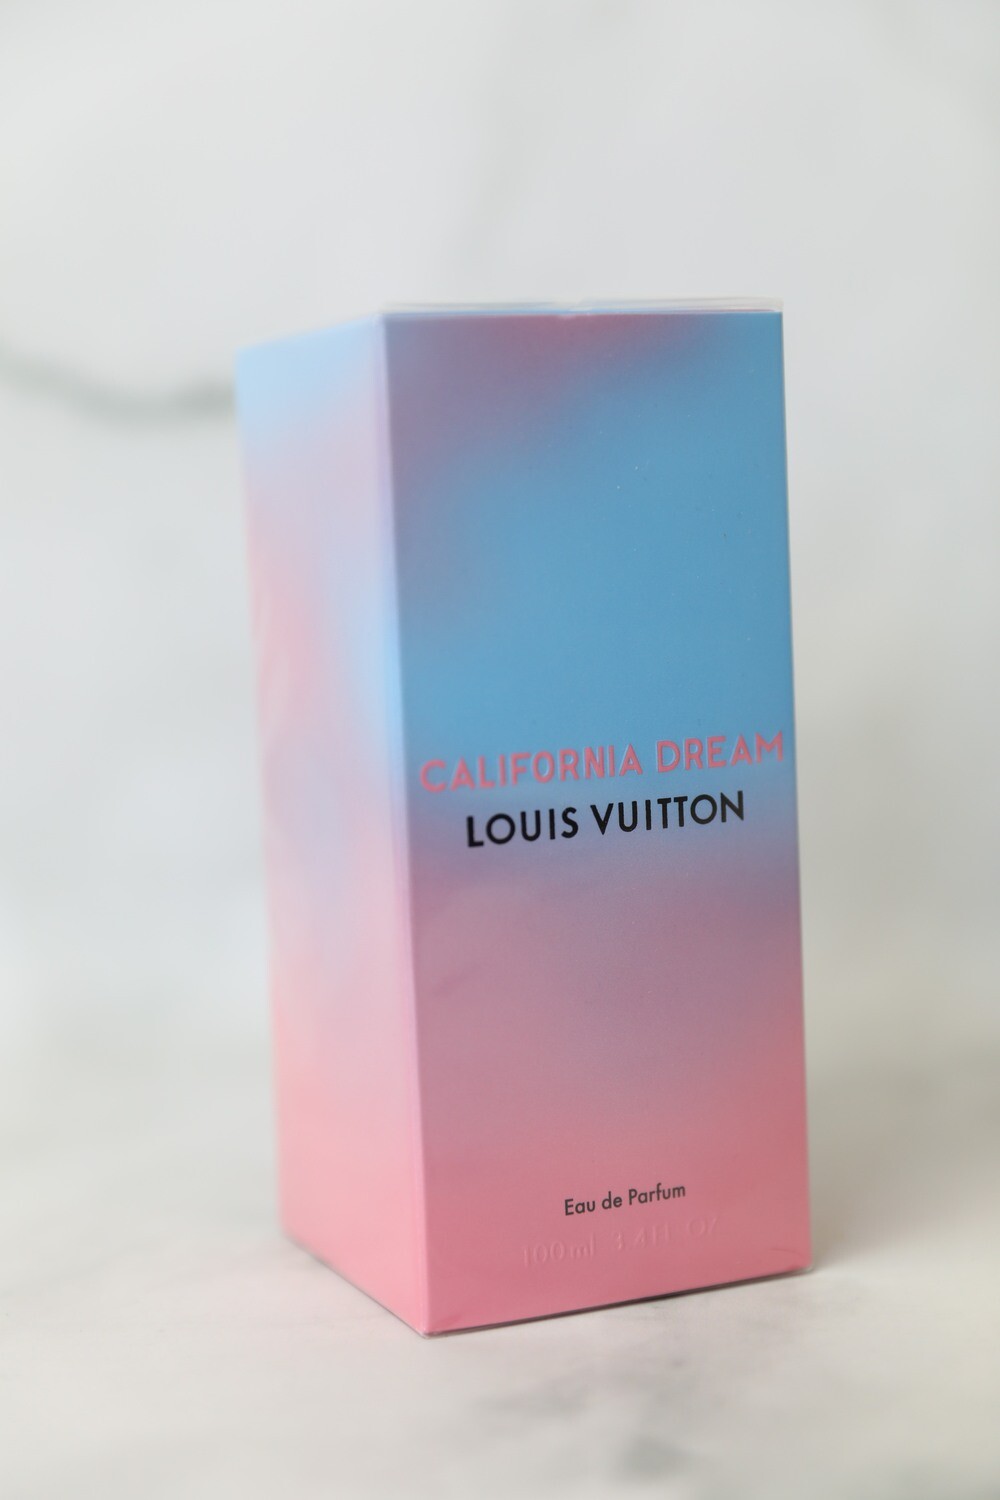 Review) Nước Hoa Louis Vuitton California Dream Thực Tế Có Mùi Thế